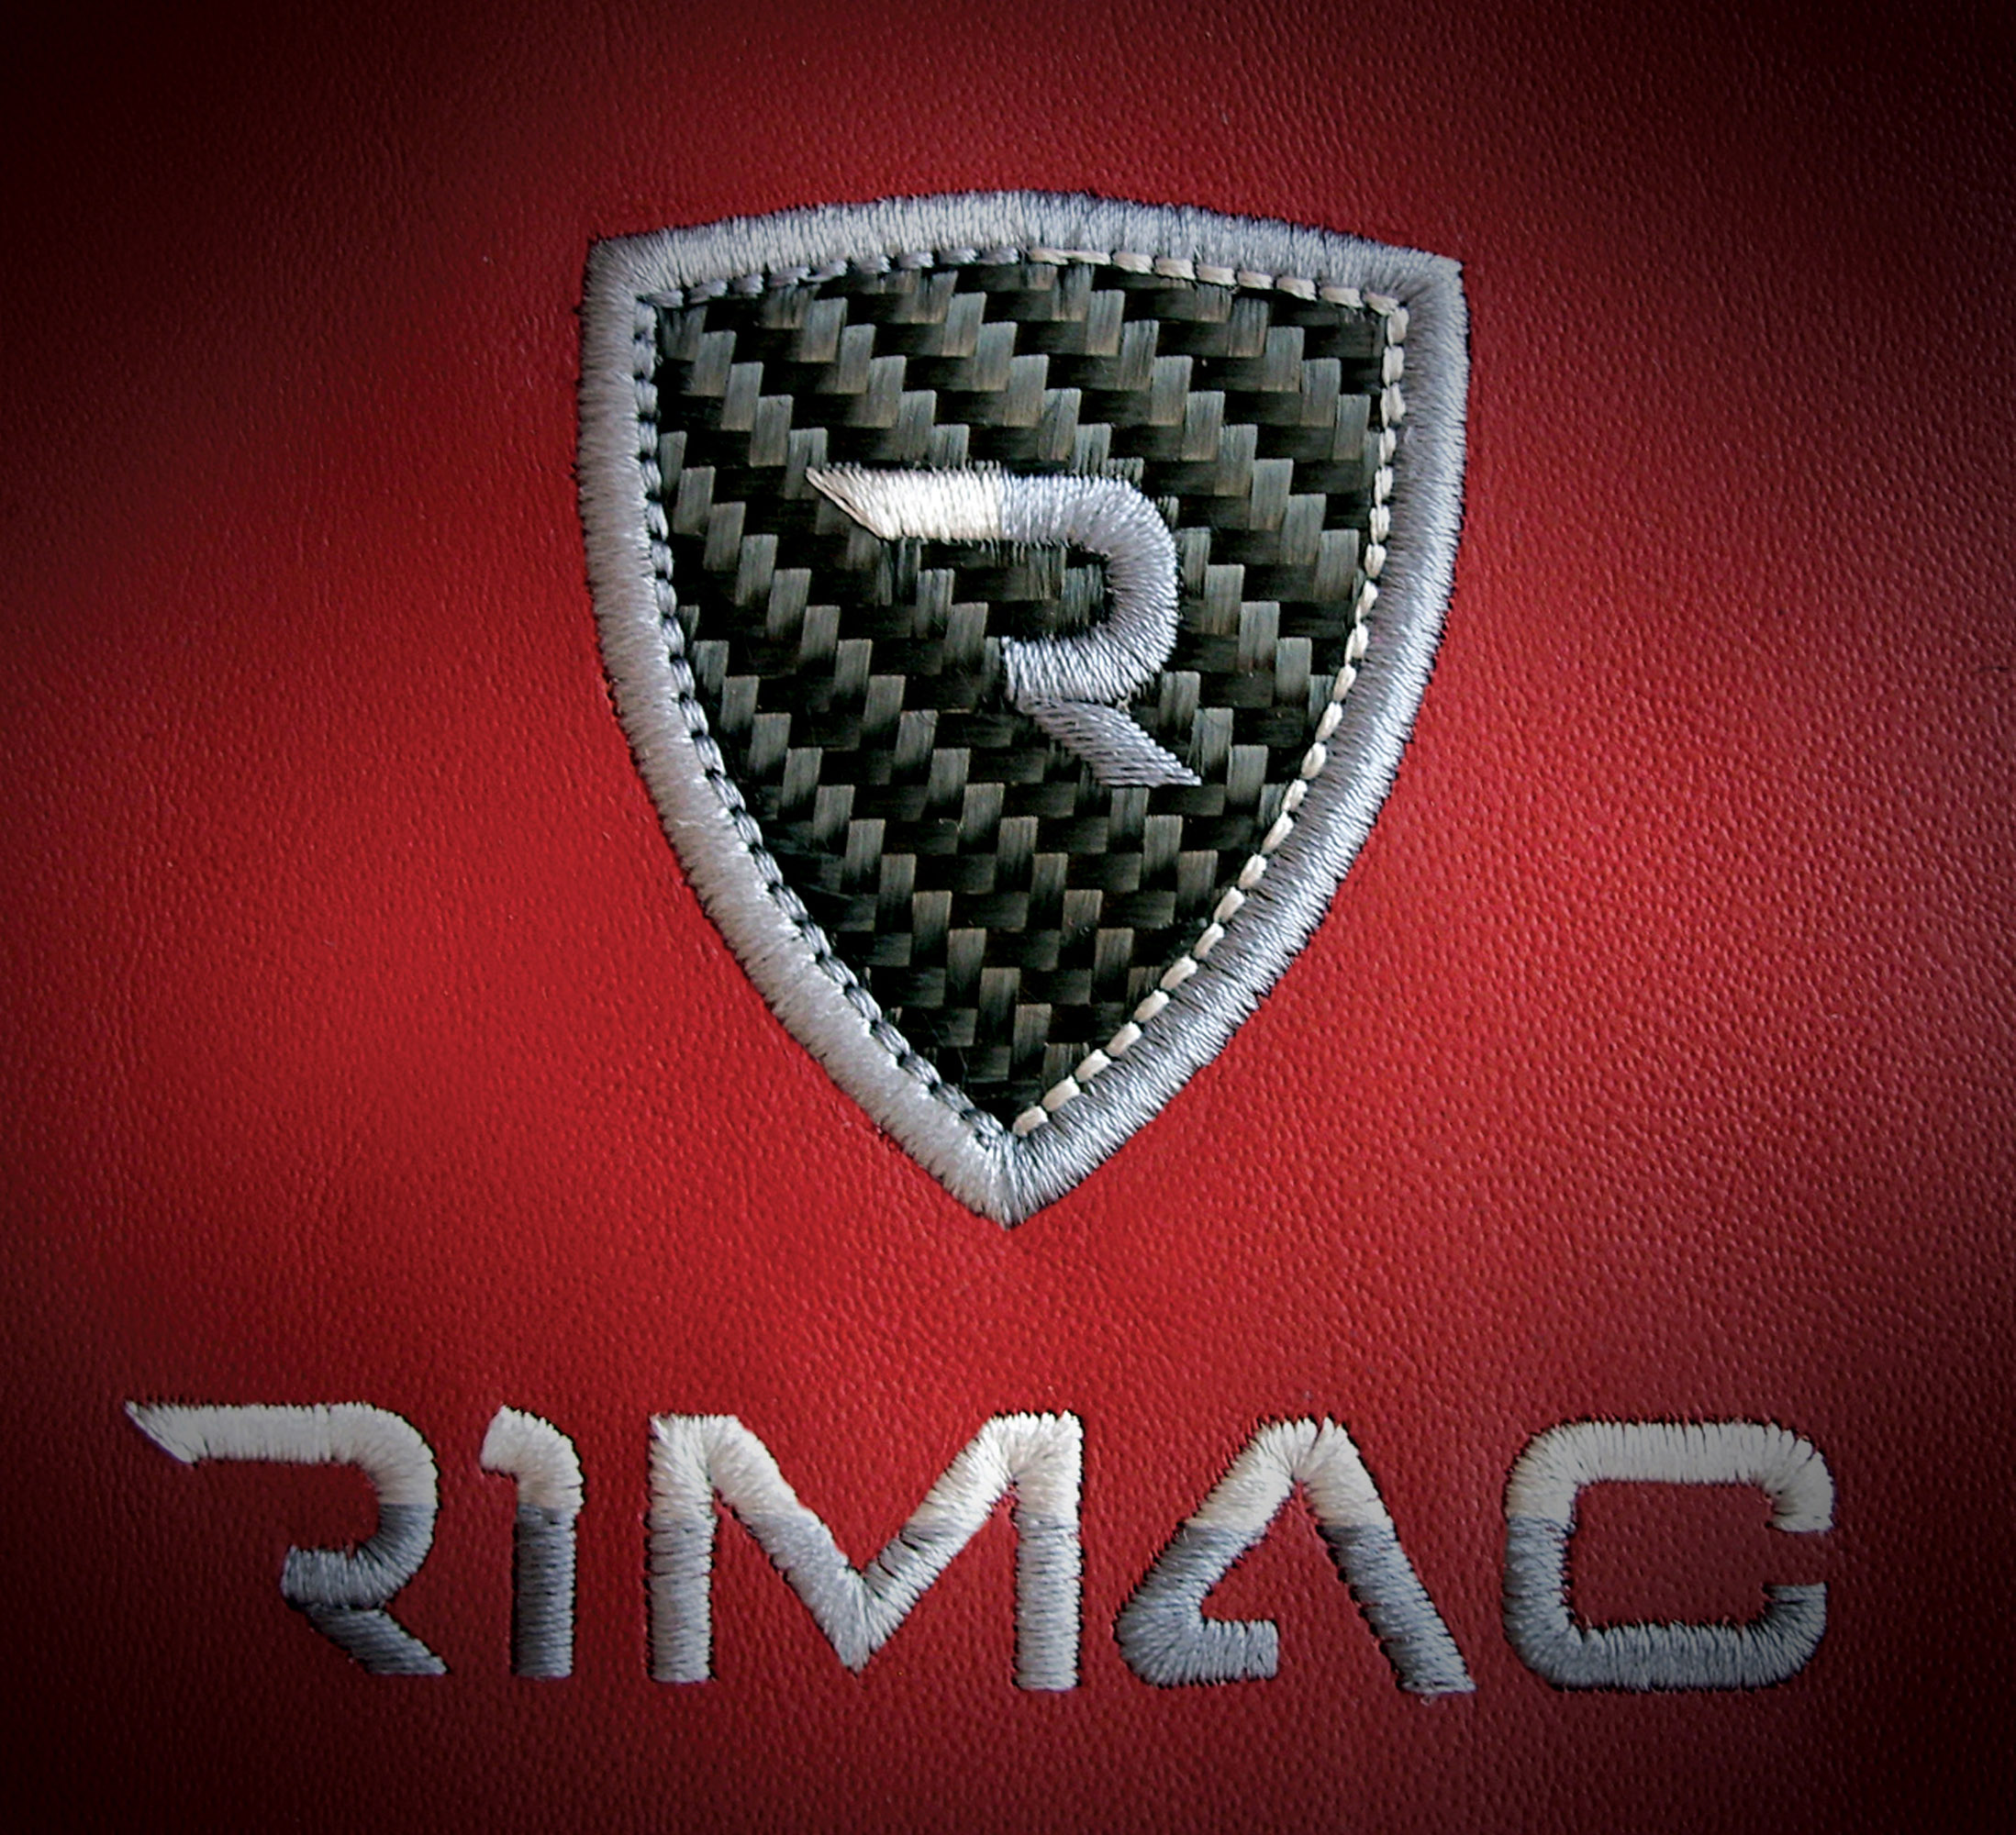 Rimac Concept One